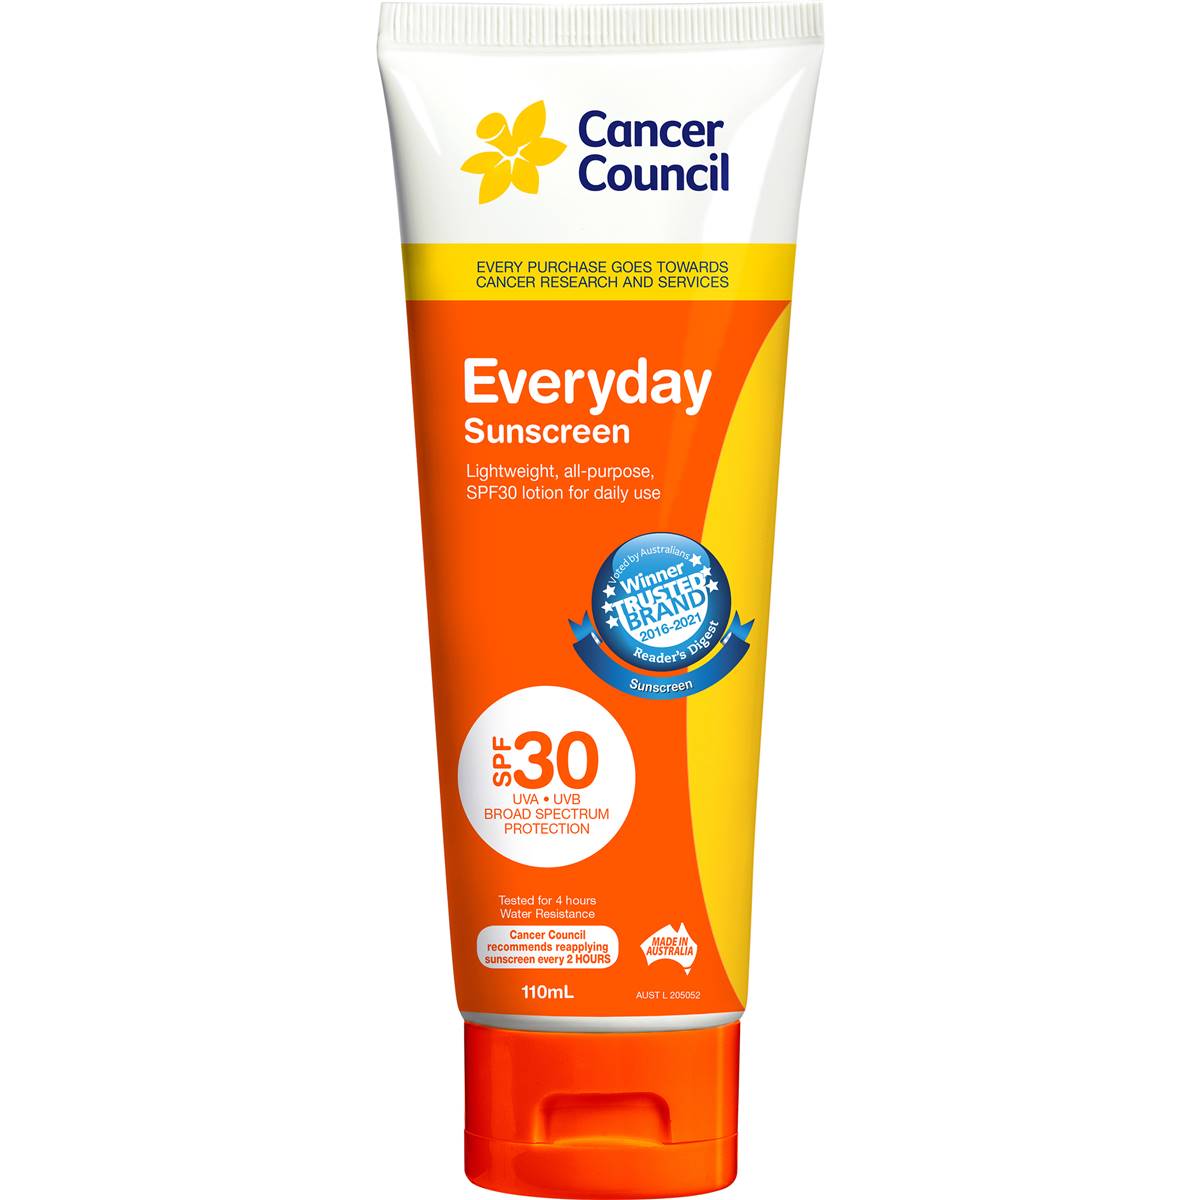 Cancer Council Spf 30+ Sunscreen Everyday